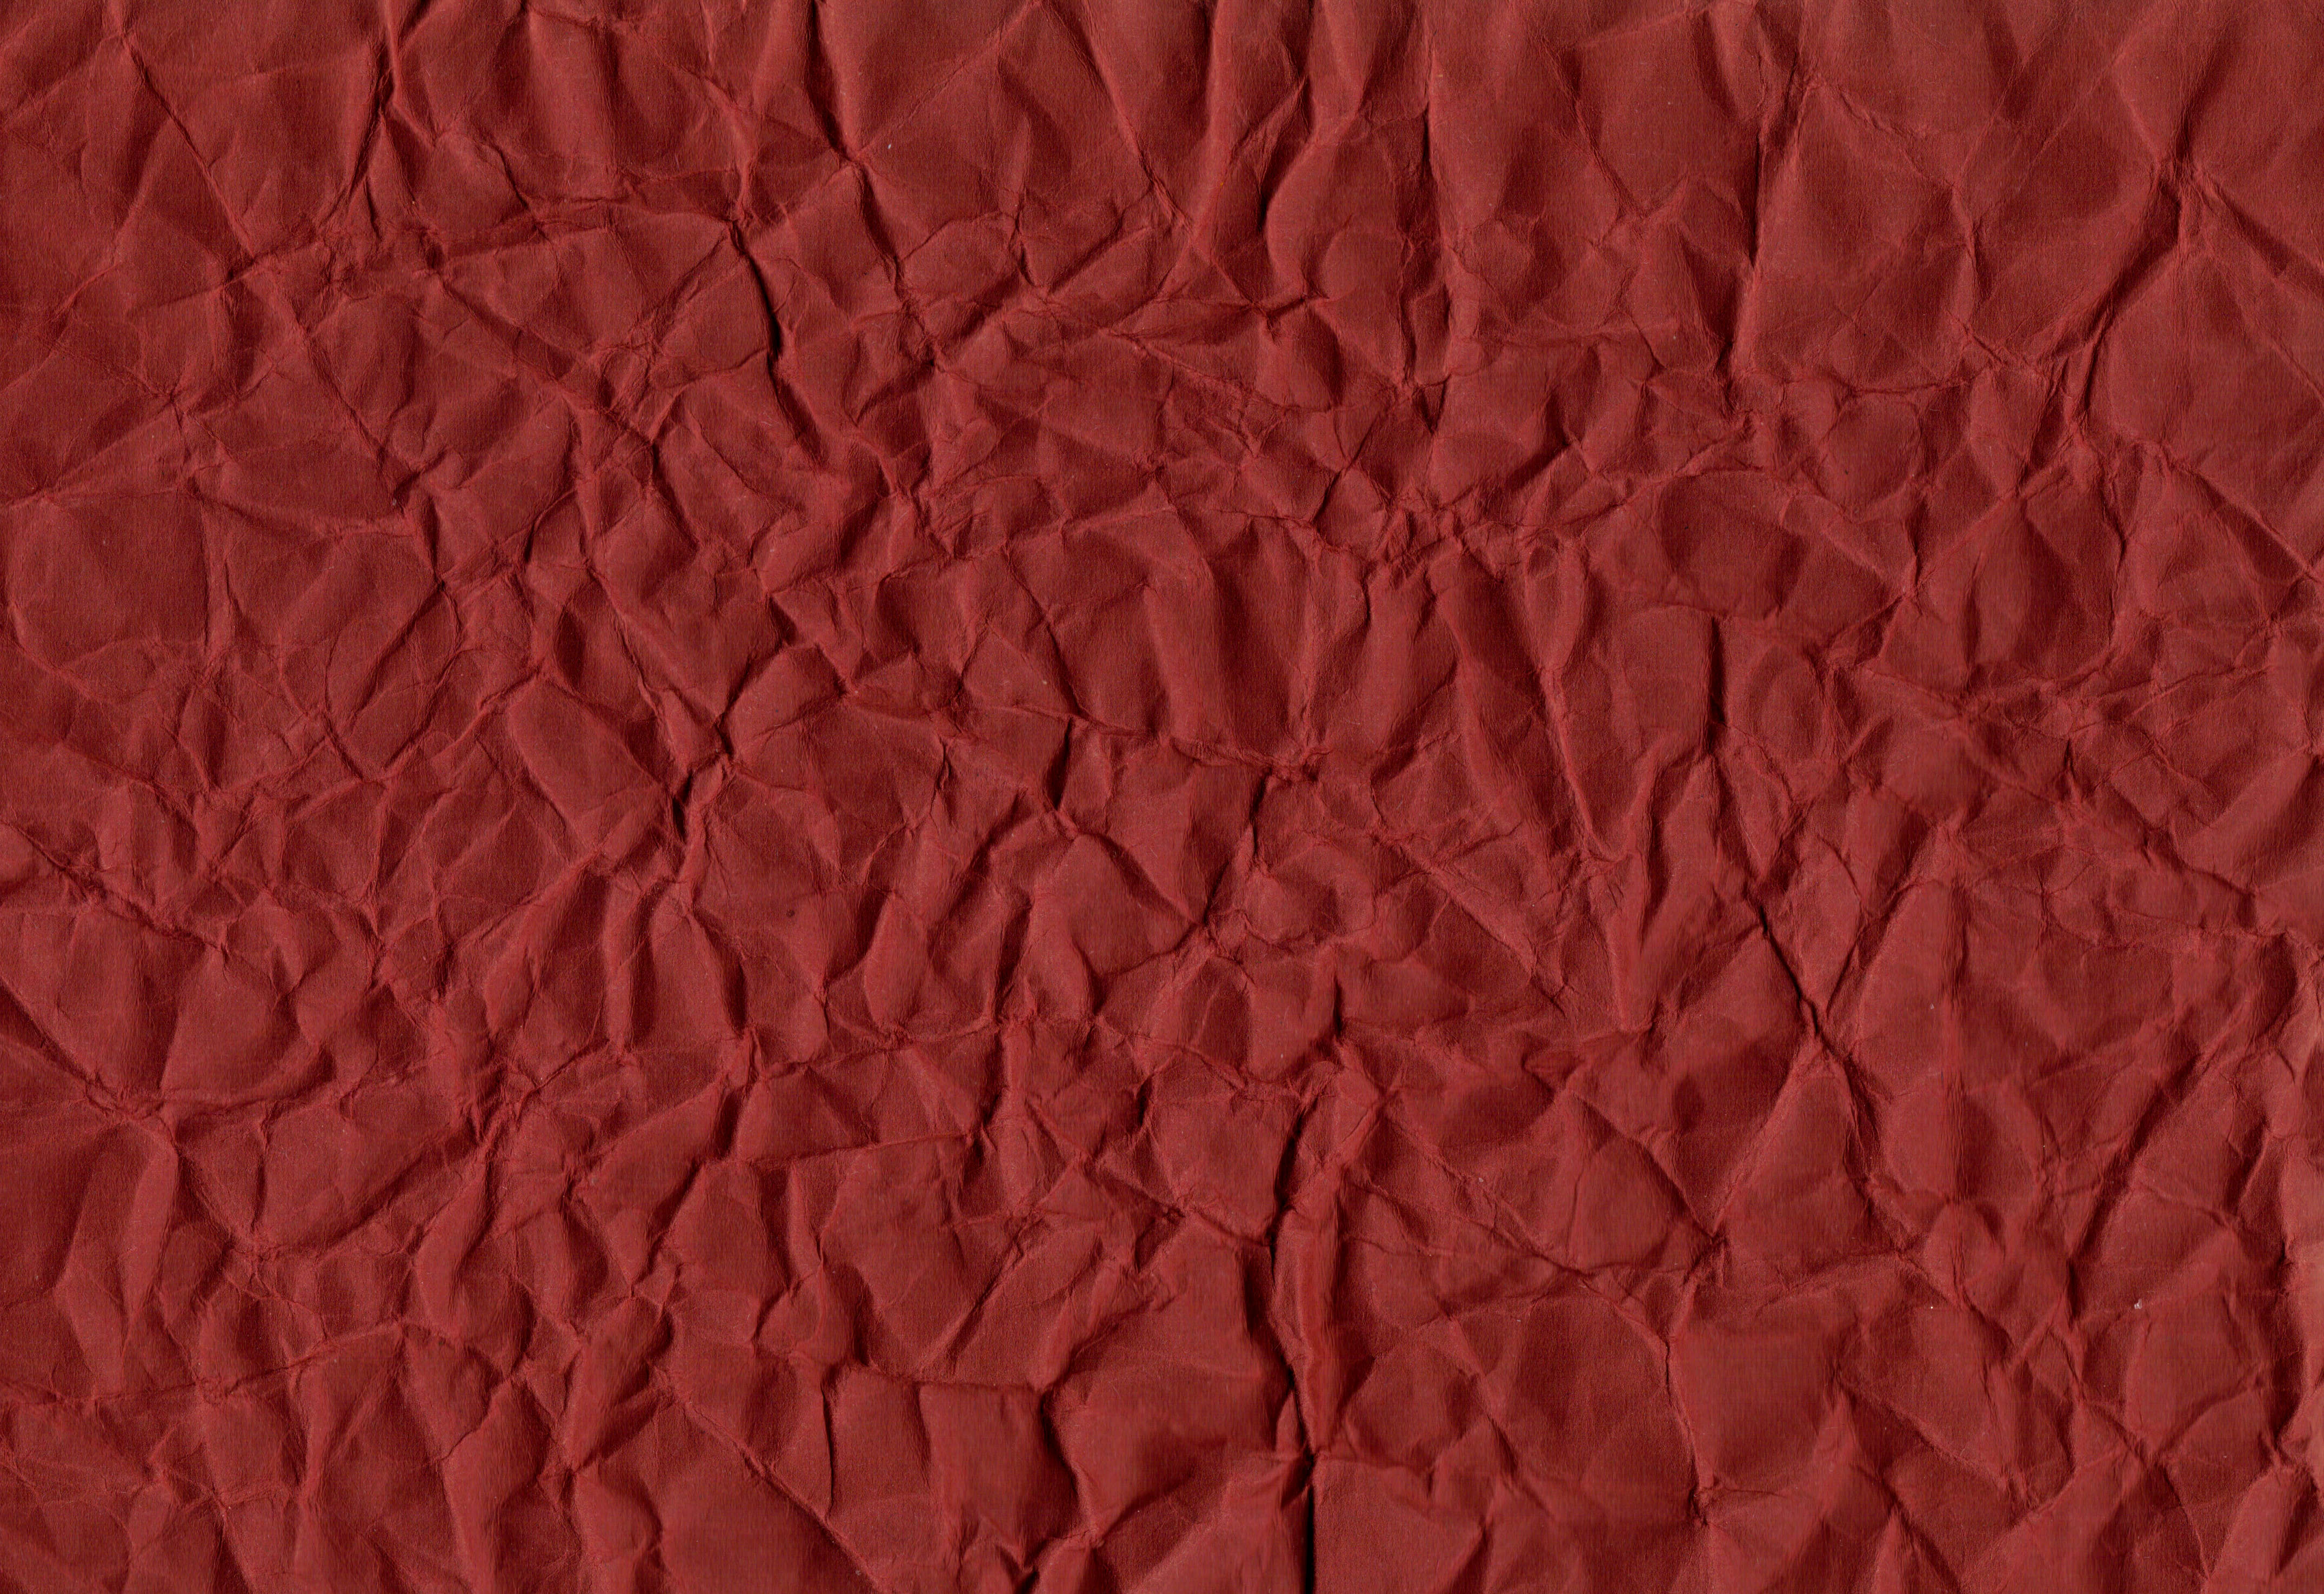 5 Wrinkled Red Paper Textures (JPG)